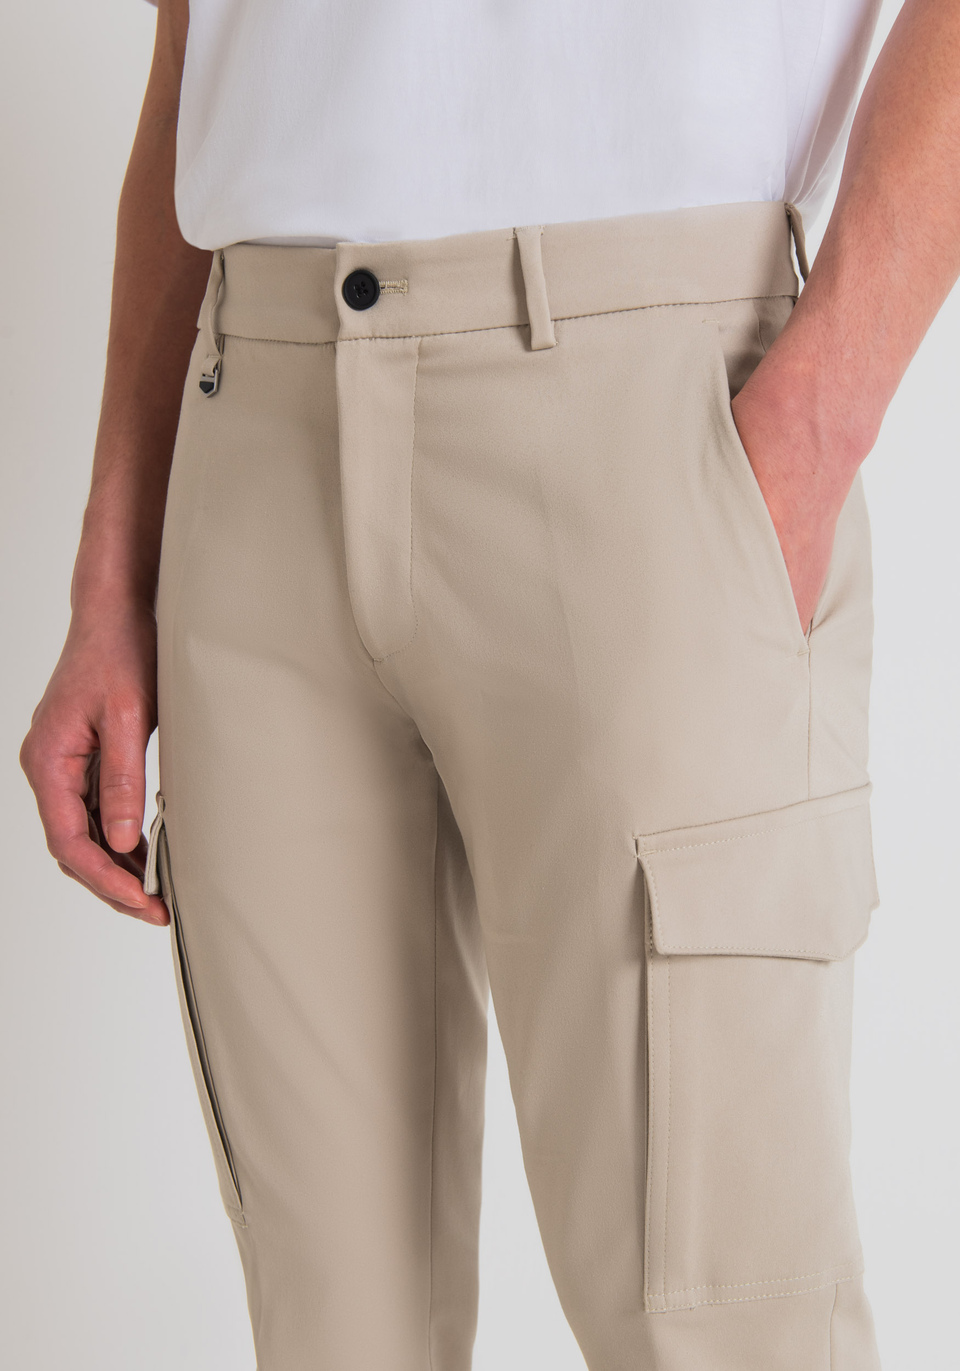 Belstaff Trialmaster Cargo Pants for men in tarp khaki | Gotlands Fashion